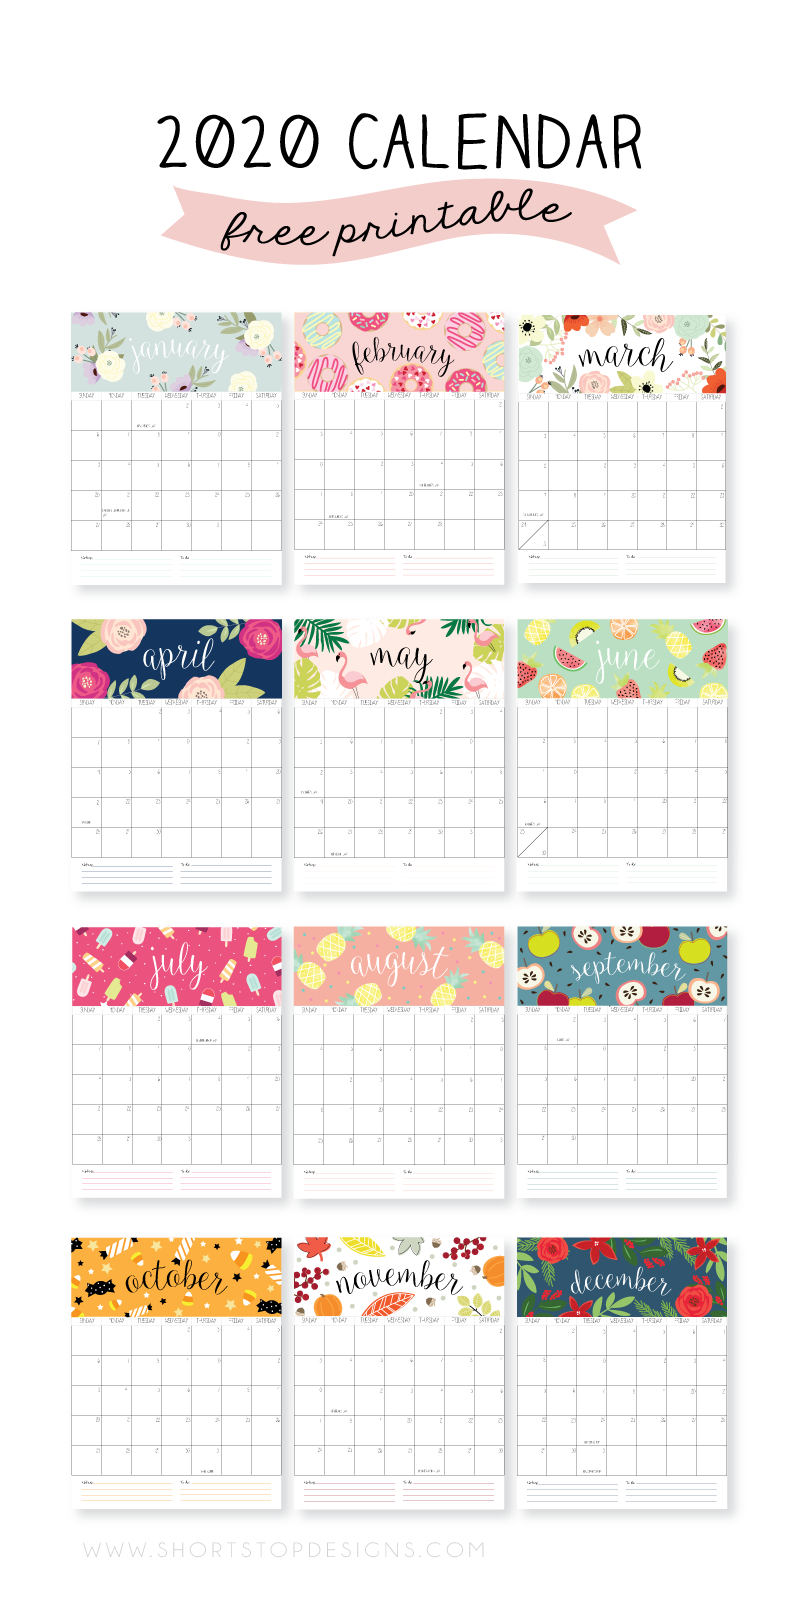 2020 Printable Calendar – Short Stop Designs